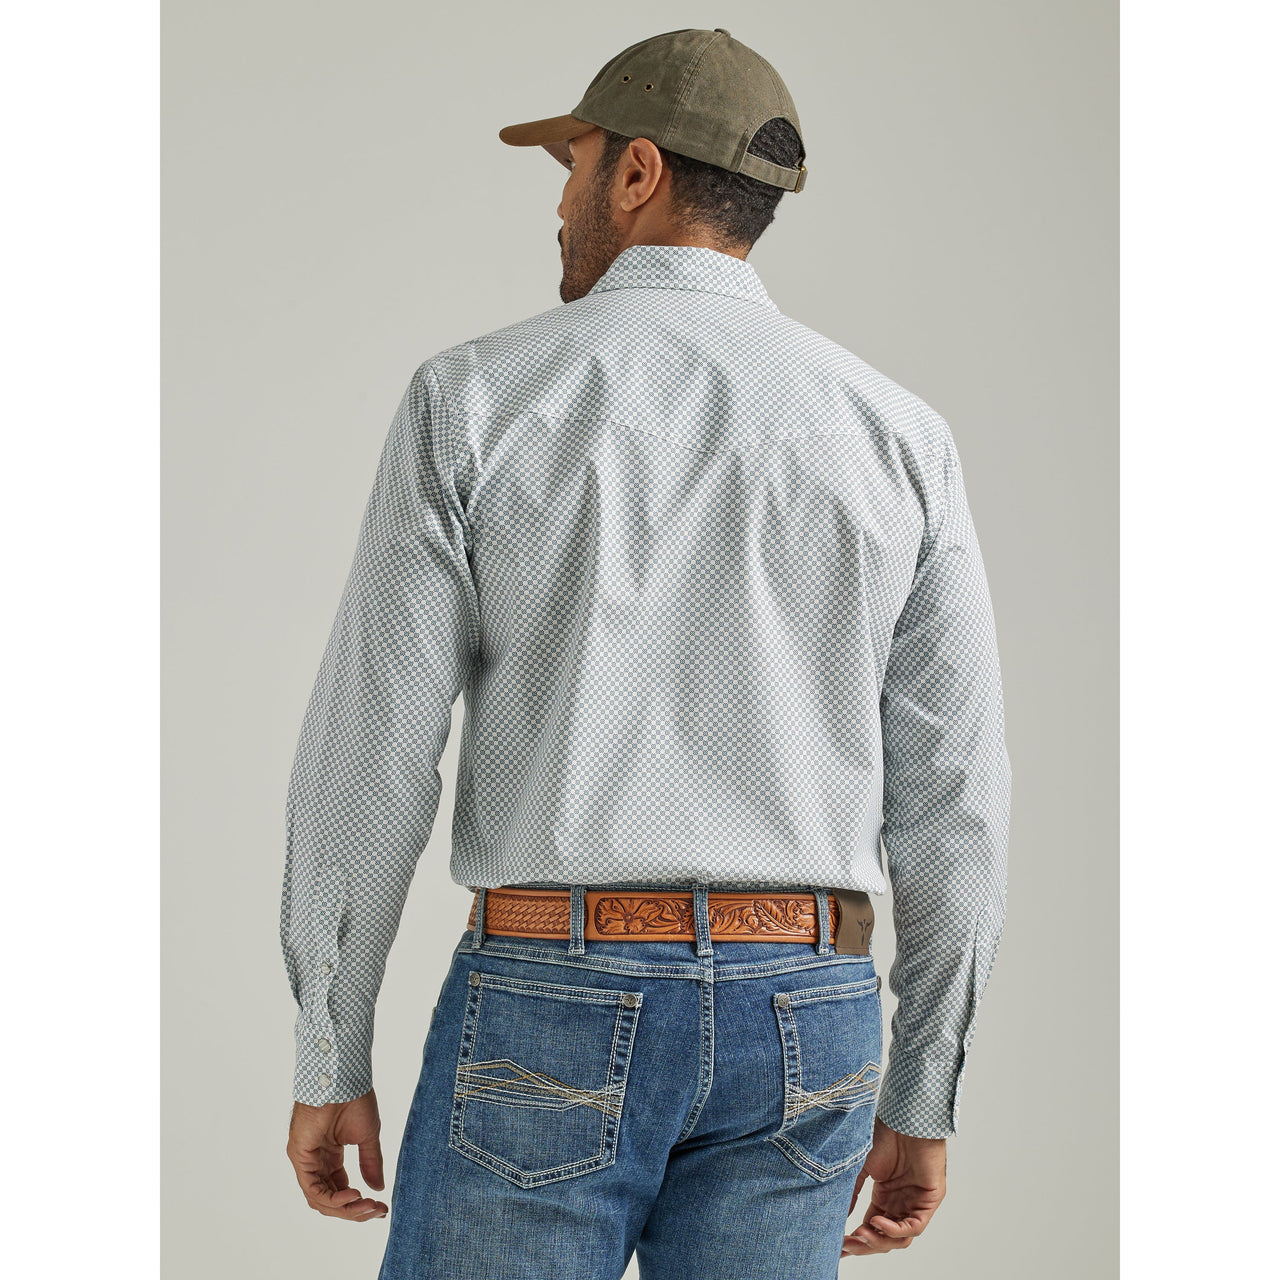 Wrangler Men's 20X Advanced Comfort Long Sleeve Shirt - Teal